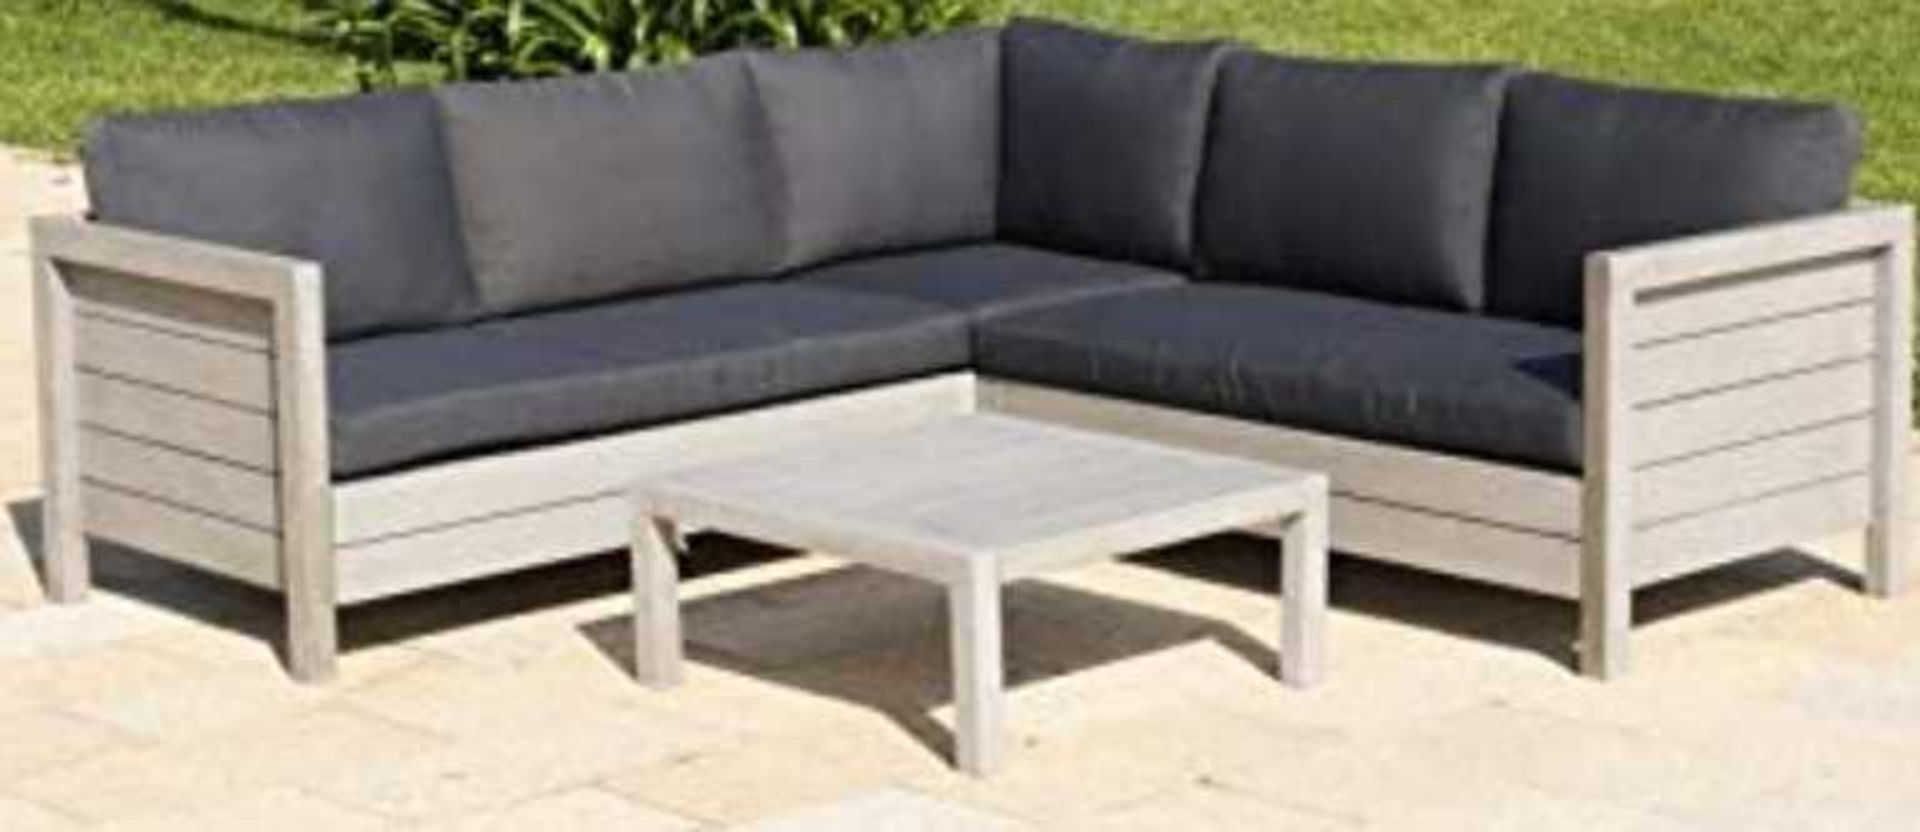 RRP £1300 Boxed Backyard Furniture Lodge - Chunky Fusc Solid Hardwood Grey wash Corner Lounge Set Wi - Image 4 of 4